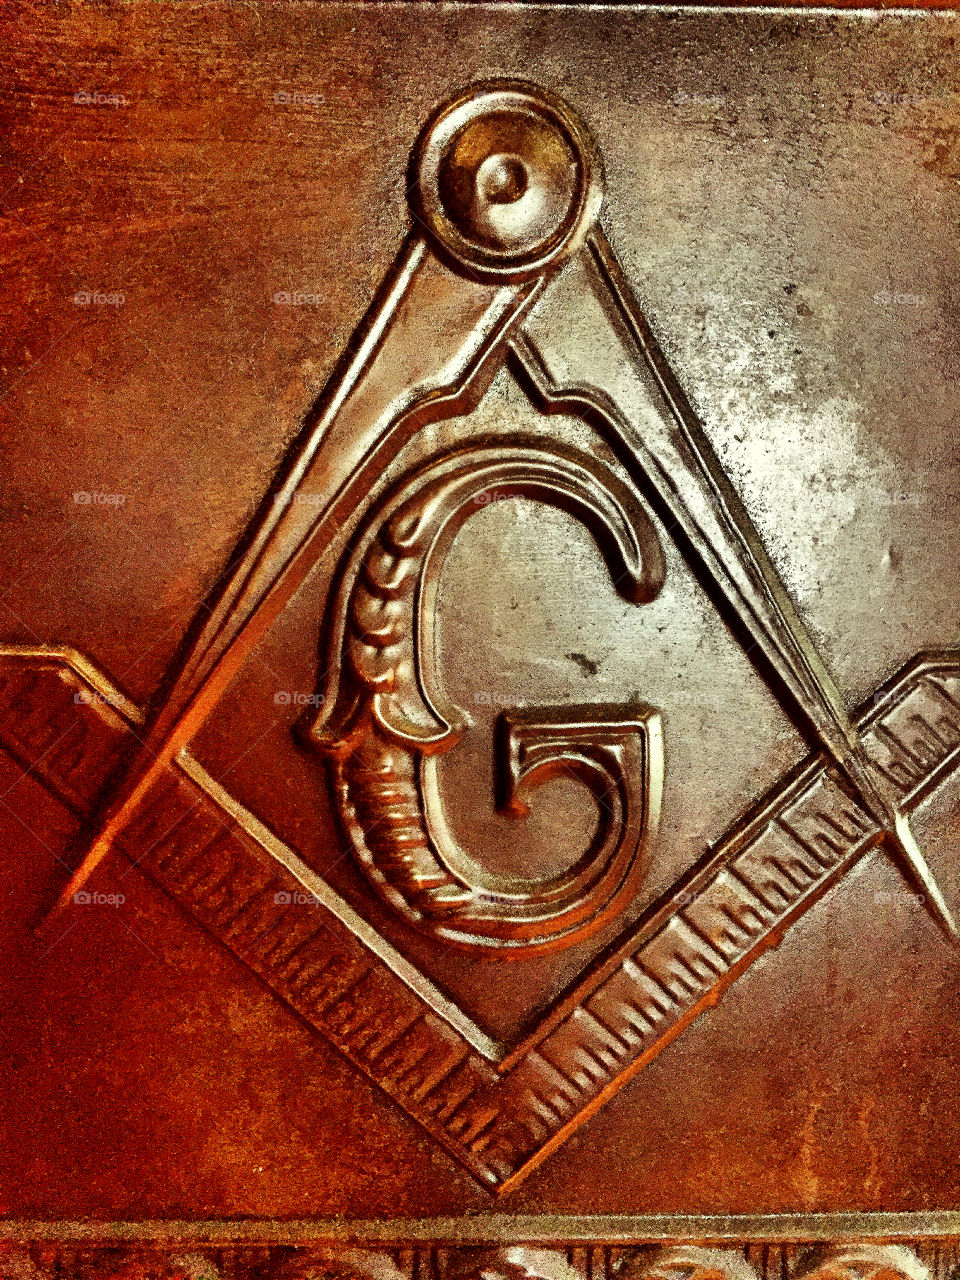 Freemason symbol. Square and compass. 